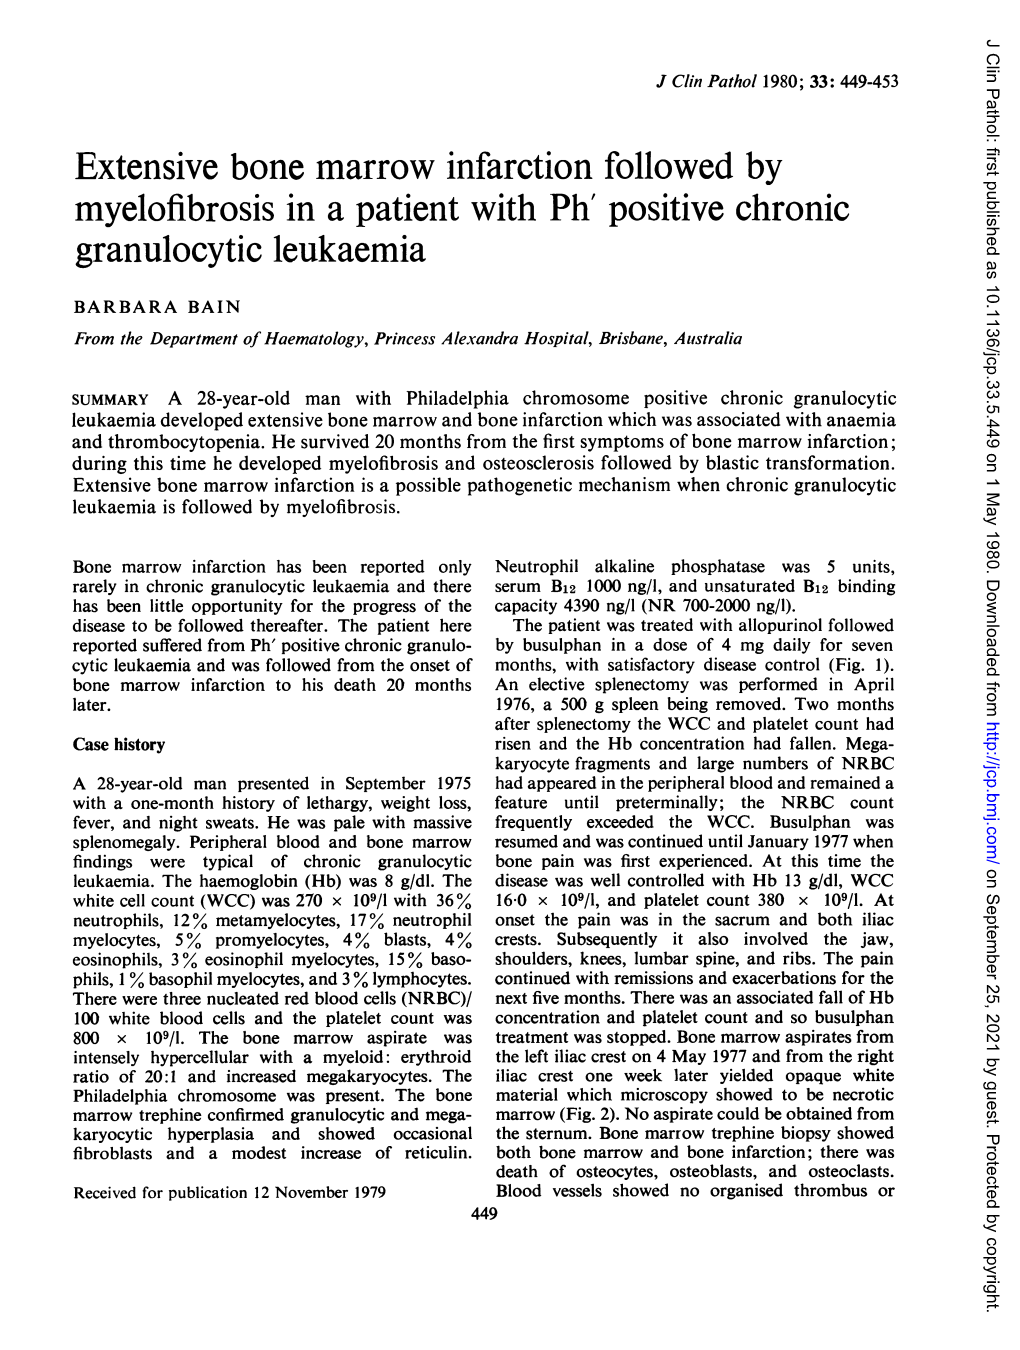 Extensive Bone Marrow Infarction Followed by Myelofibrosis in a Patient with Ph' Positive Chronic Granulocytic Leukaemia